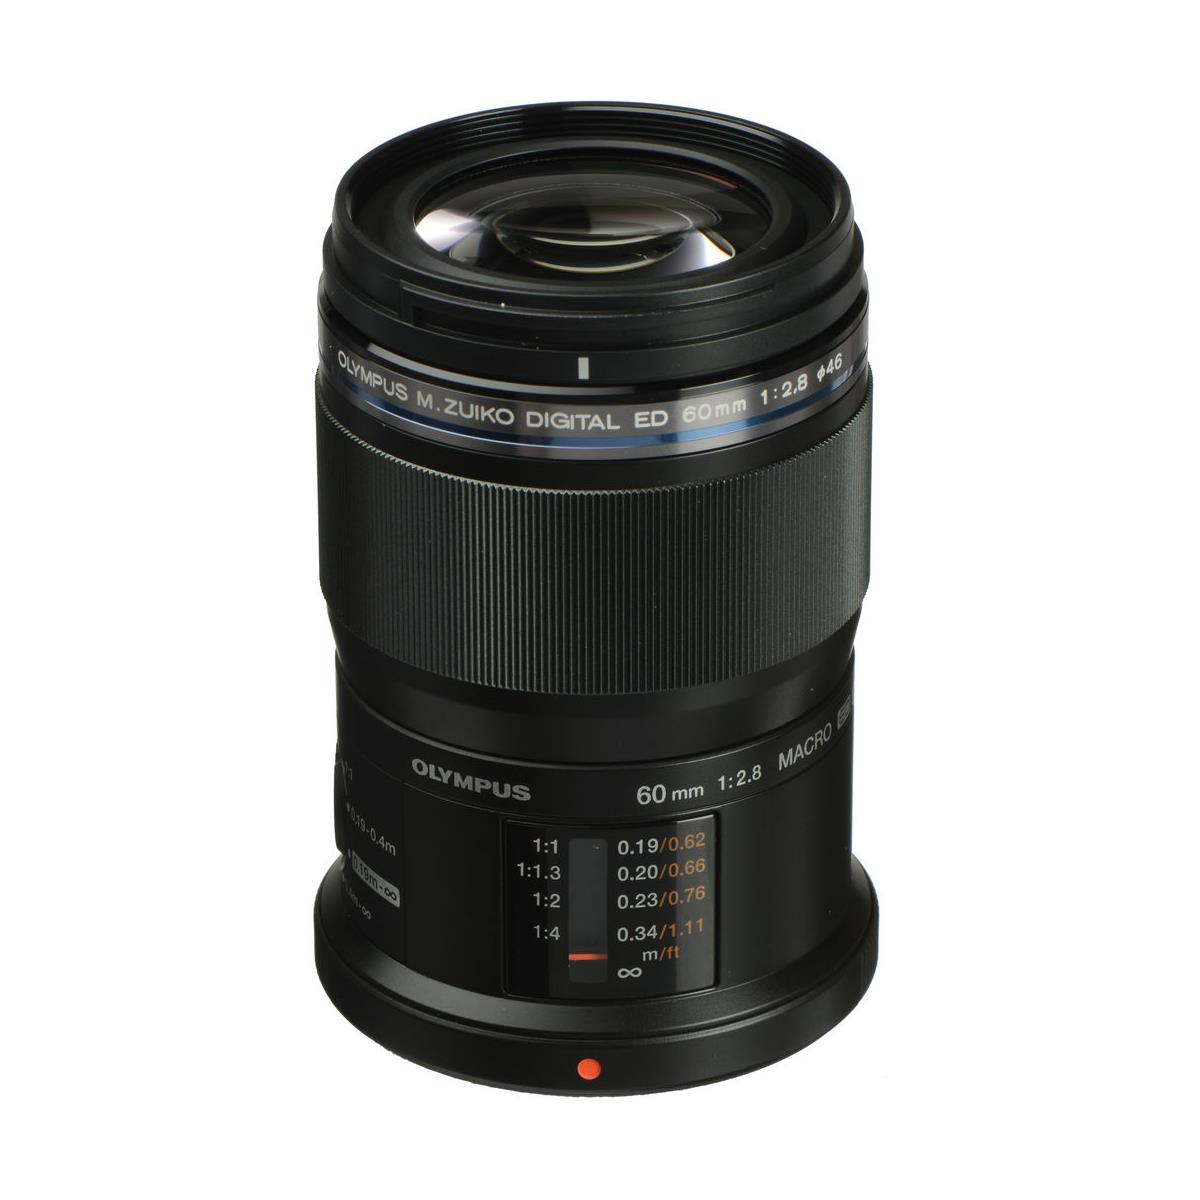 Olympus 60mm f/2.8 M.ZUIKO DIGITAL ED  Macro Lens for Micro Four Thirds